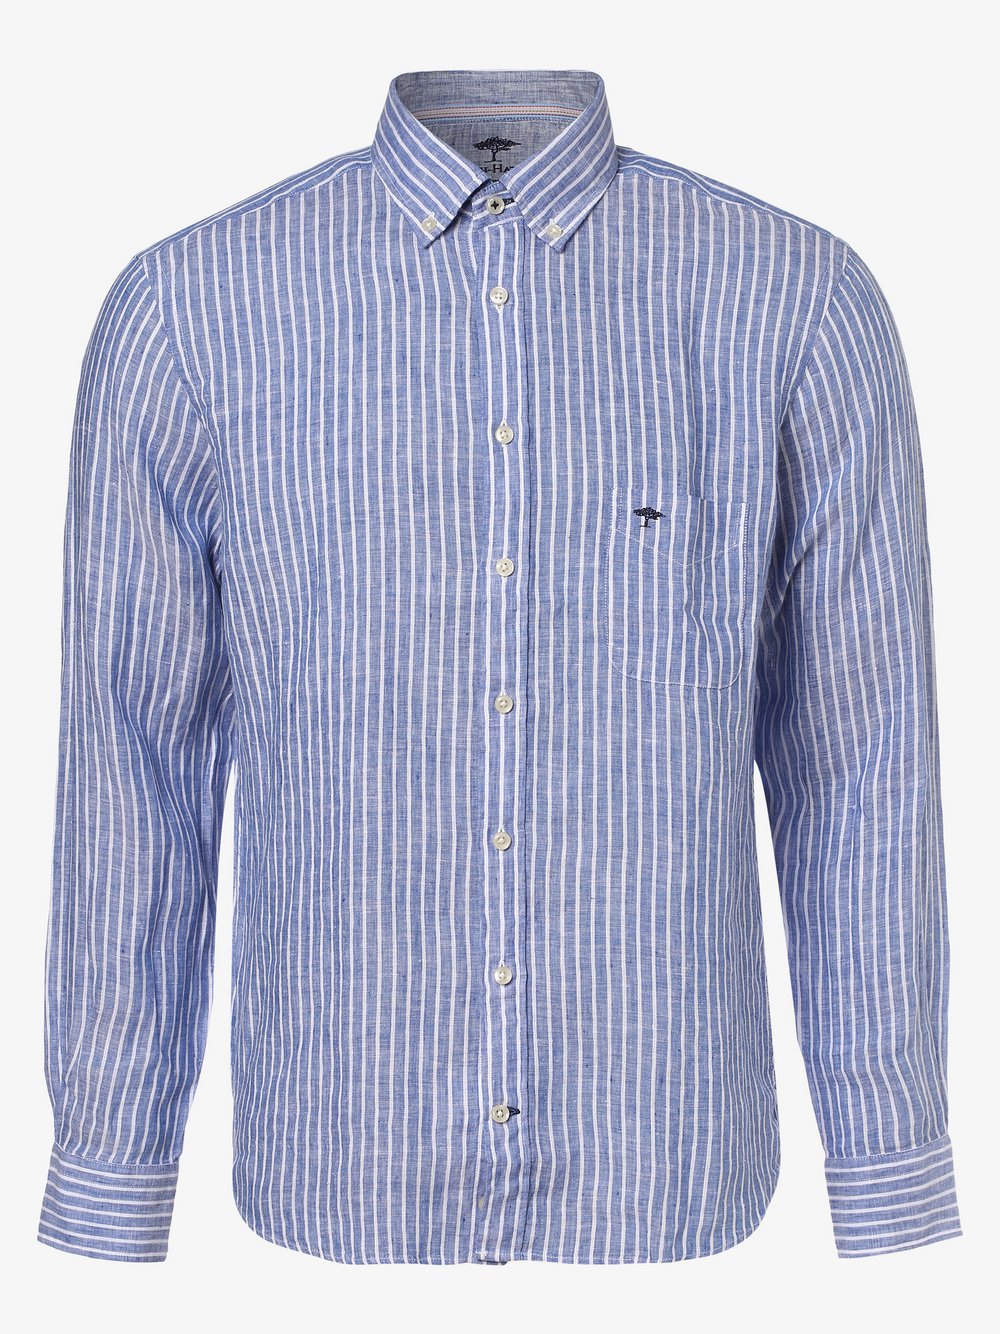 Fynch-Hatton - Męska koszula lniana, niebieski